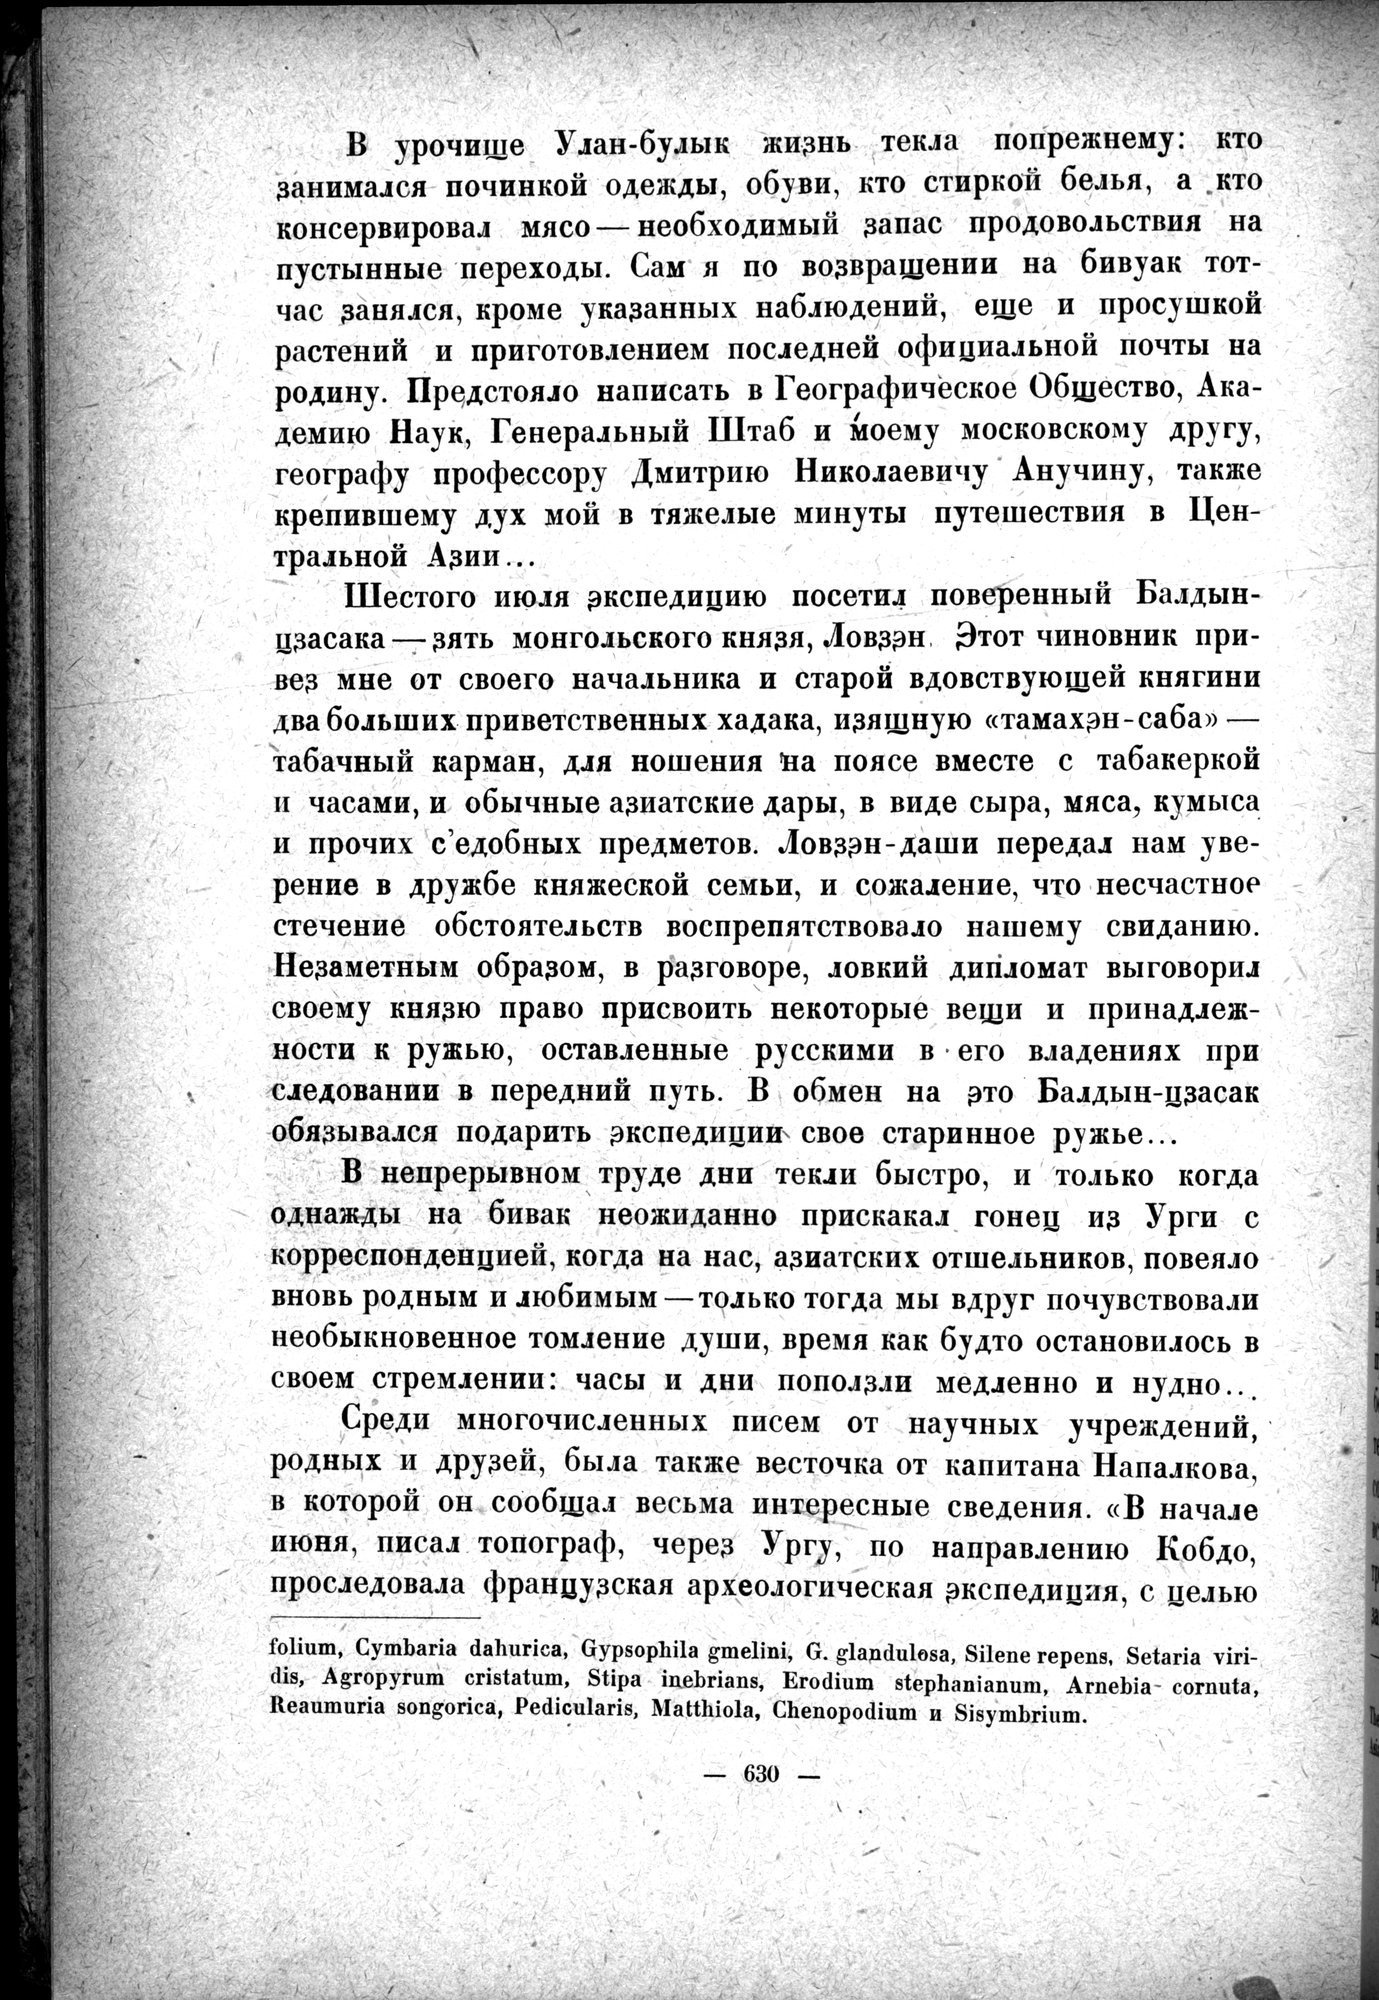 Mongoliya i Amdo i mertby gorod Khara-Khoto : vol.1 / Page 720 (Grayscale High Resolution Image)